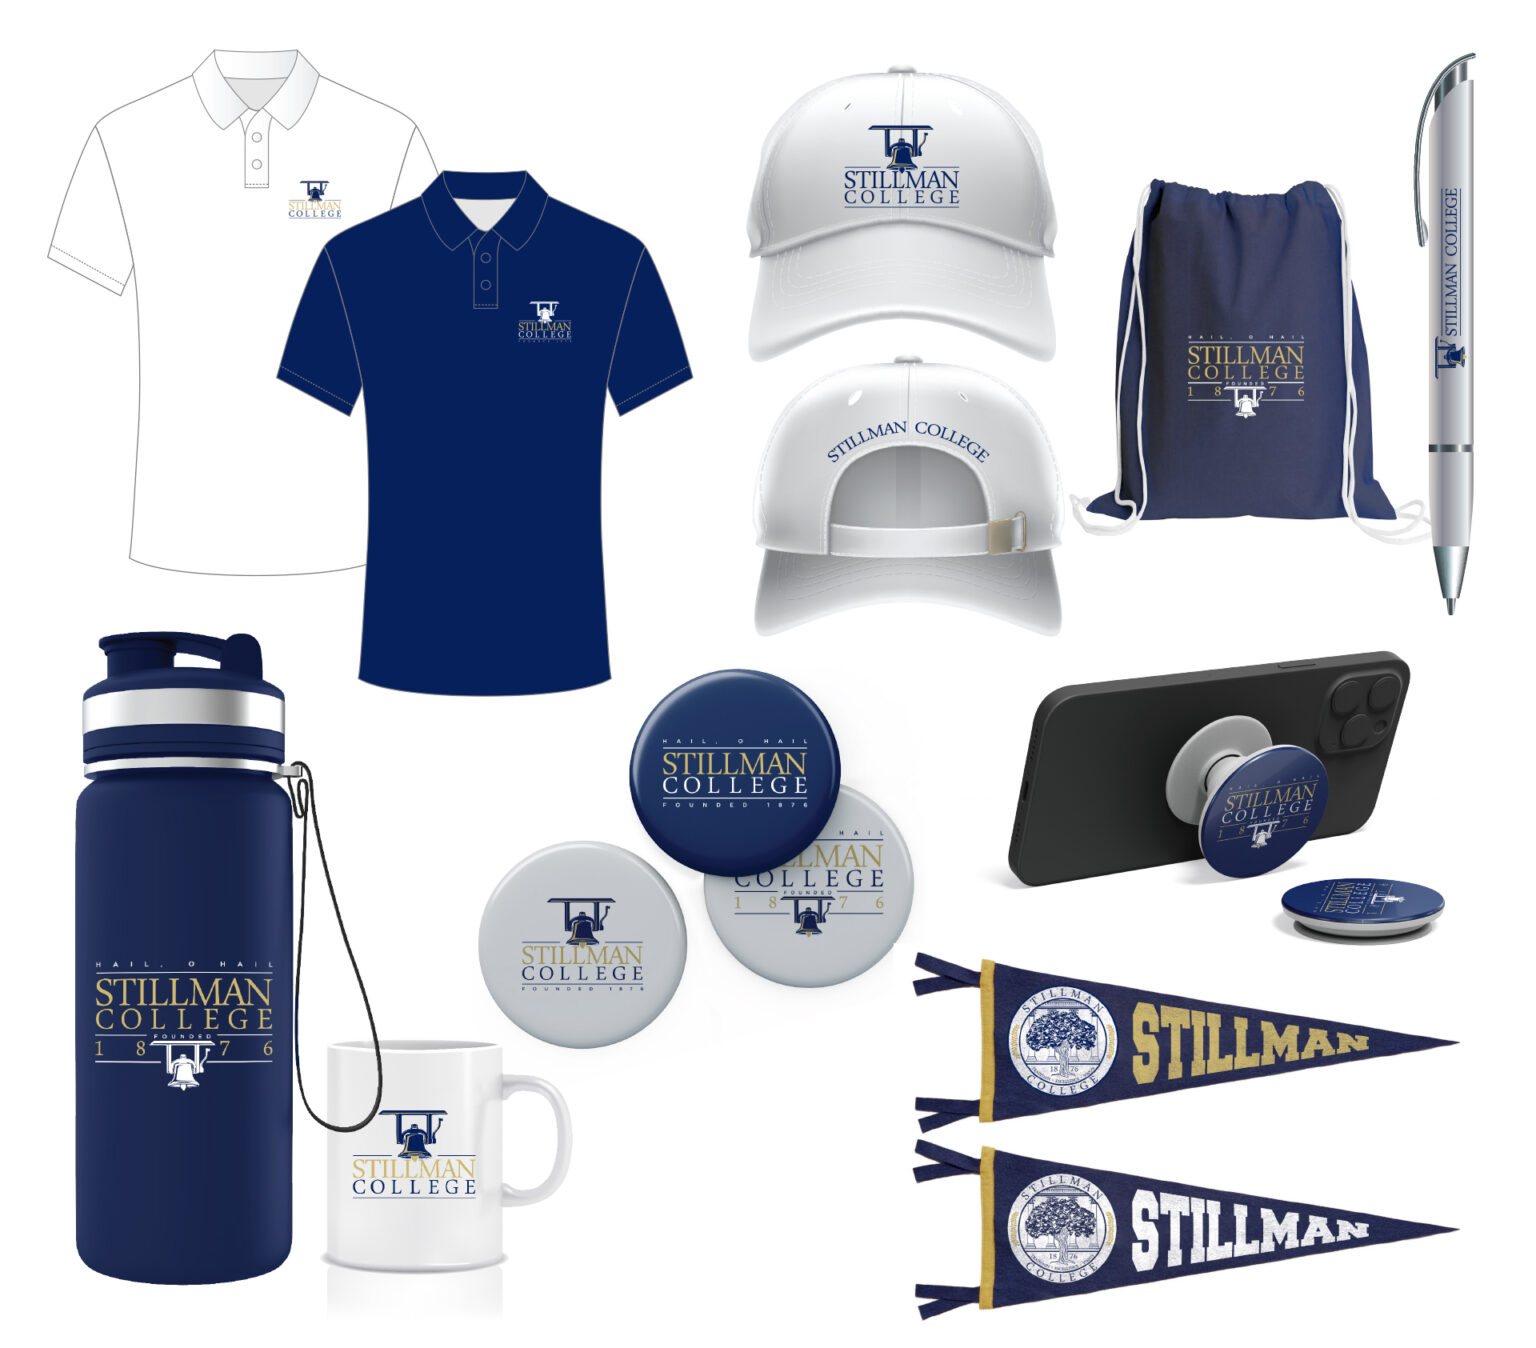 stillman college promo items